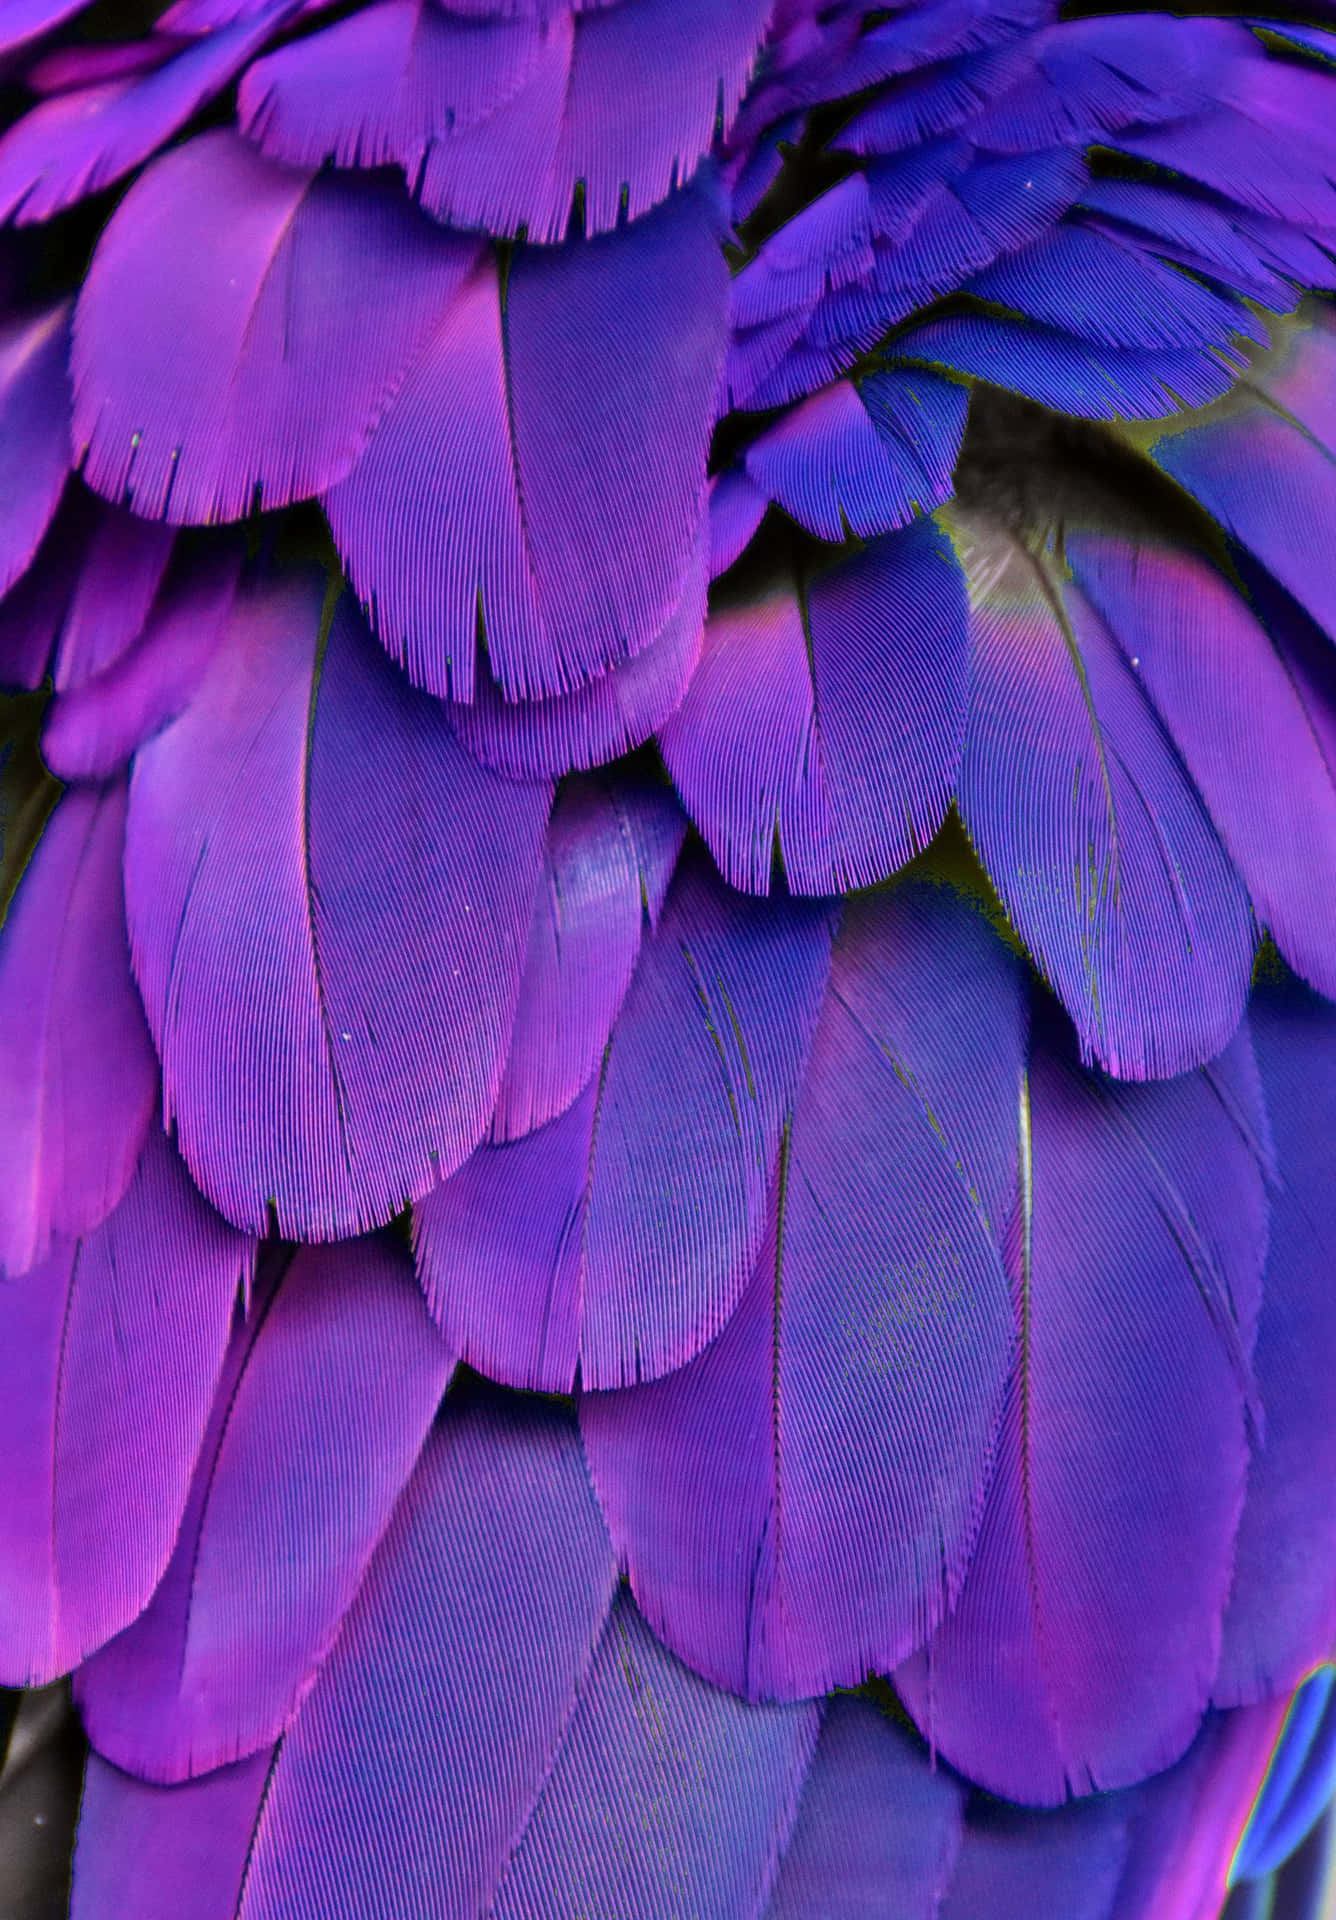 Stunning Image of Purple Feathers Wallpaper